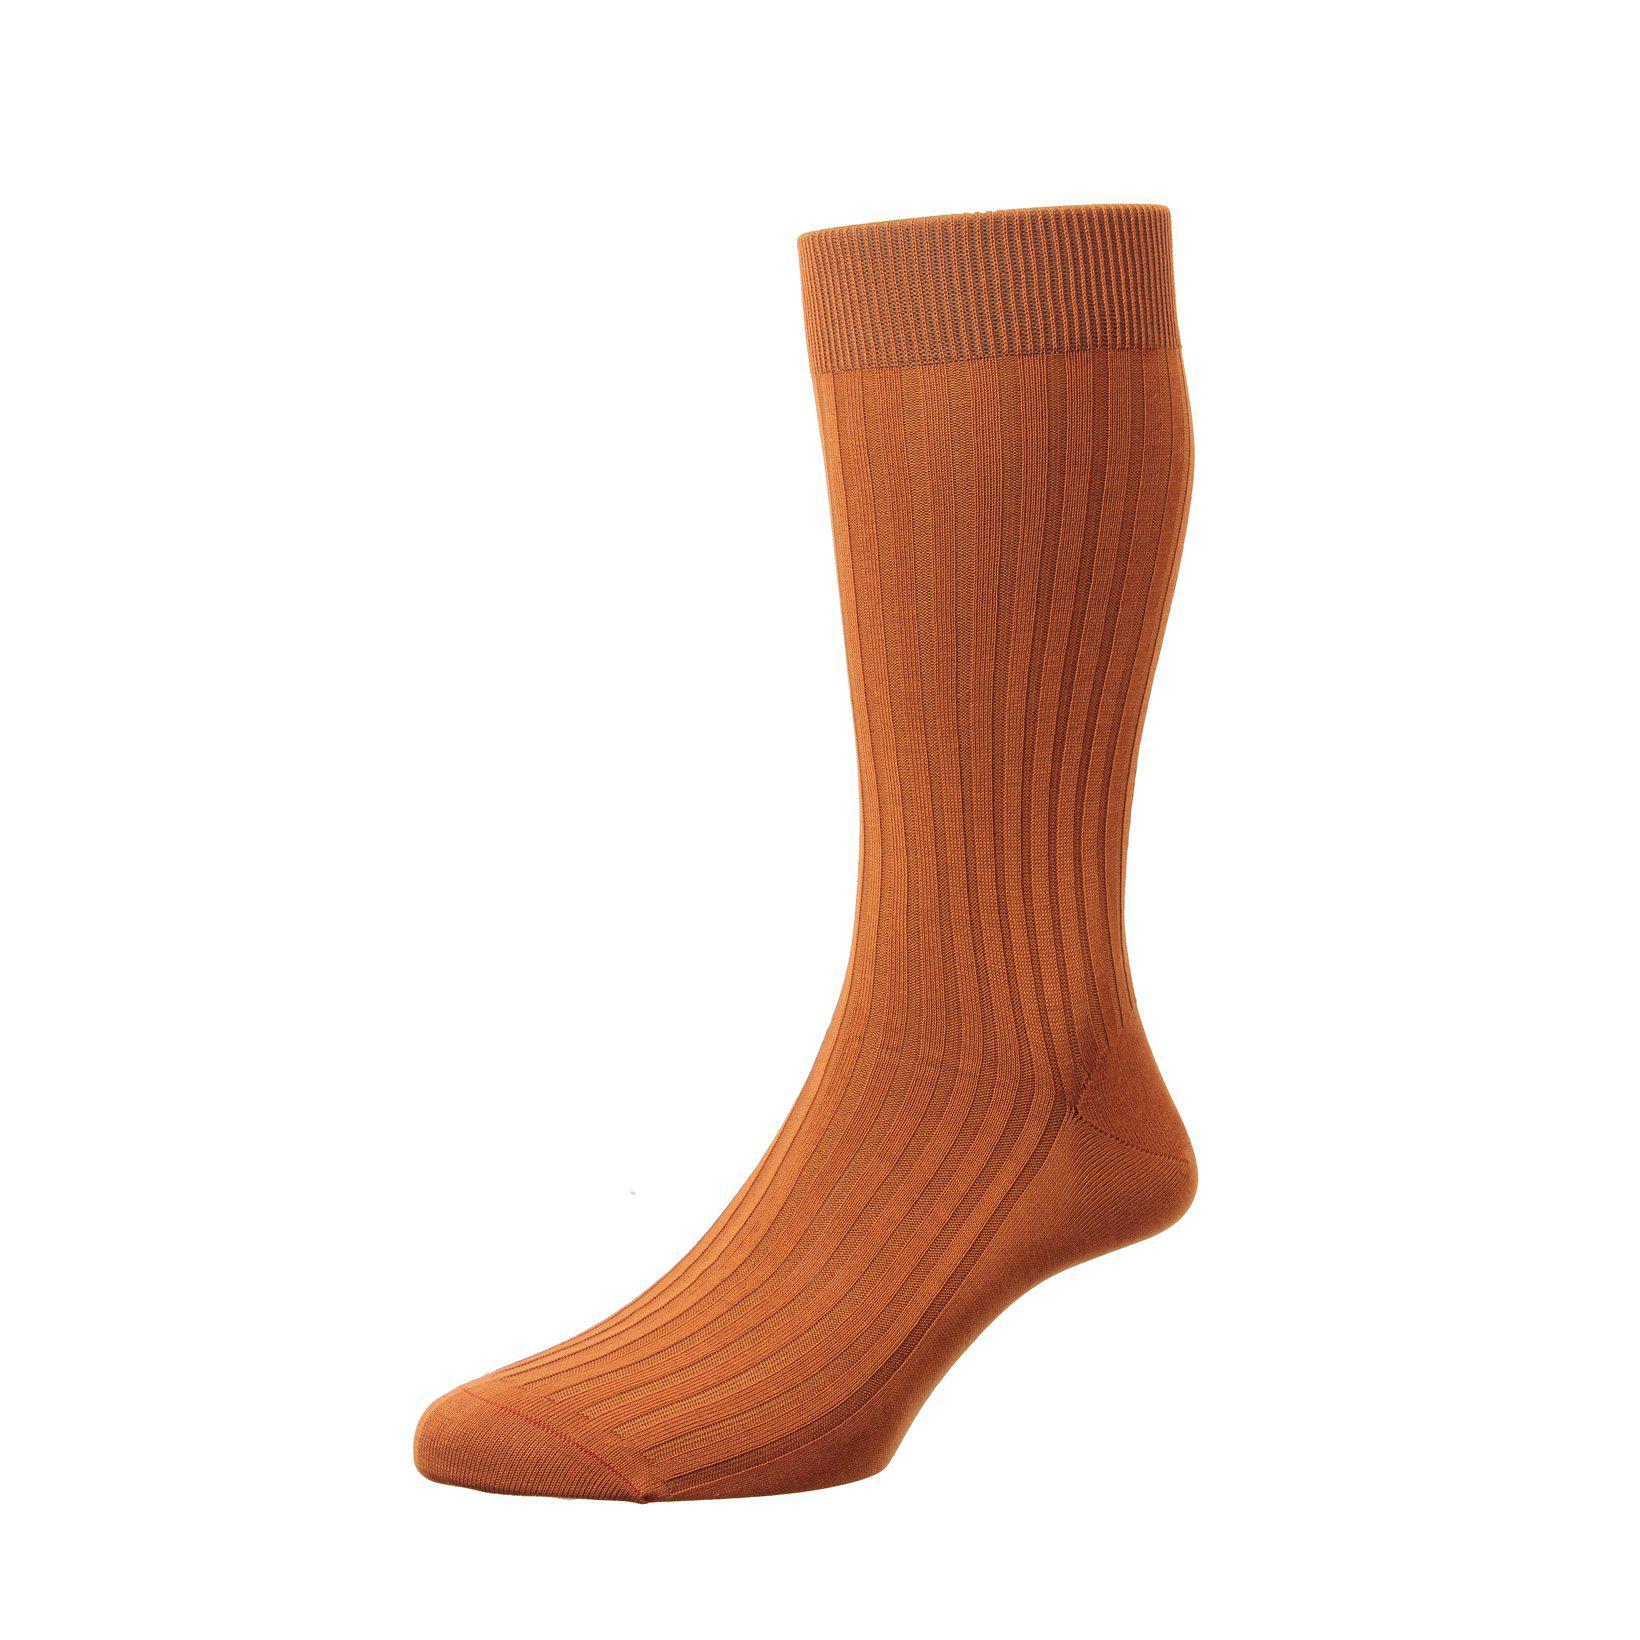 Danvers Socken Aus Mercerisierter Baumwolle 5X3 Rippe-Pantherella-Conrad Hasselbach Shoes & Garment